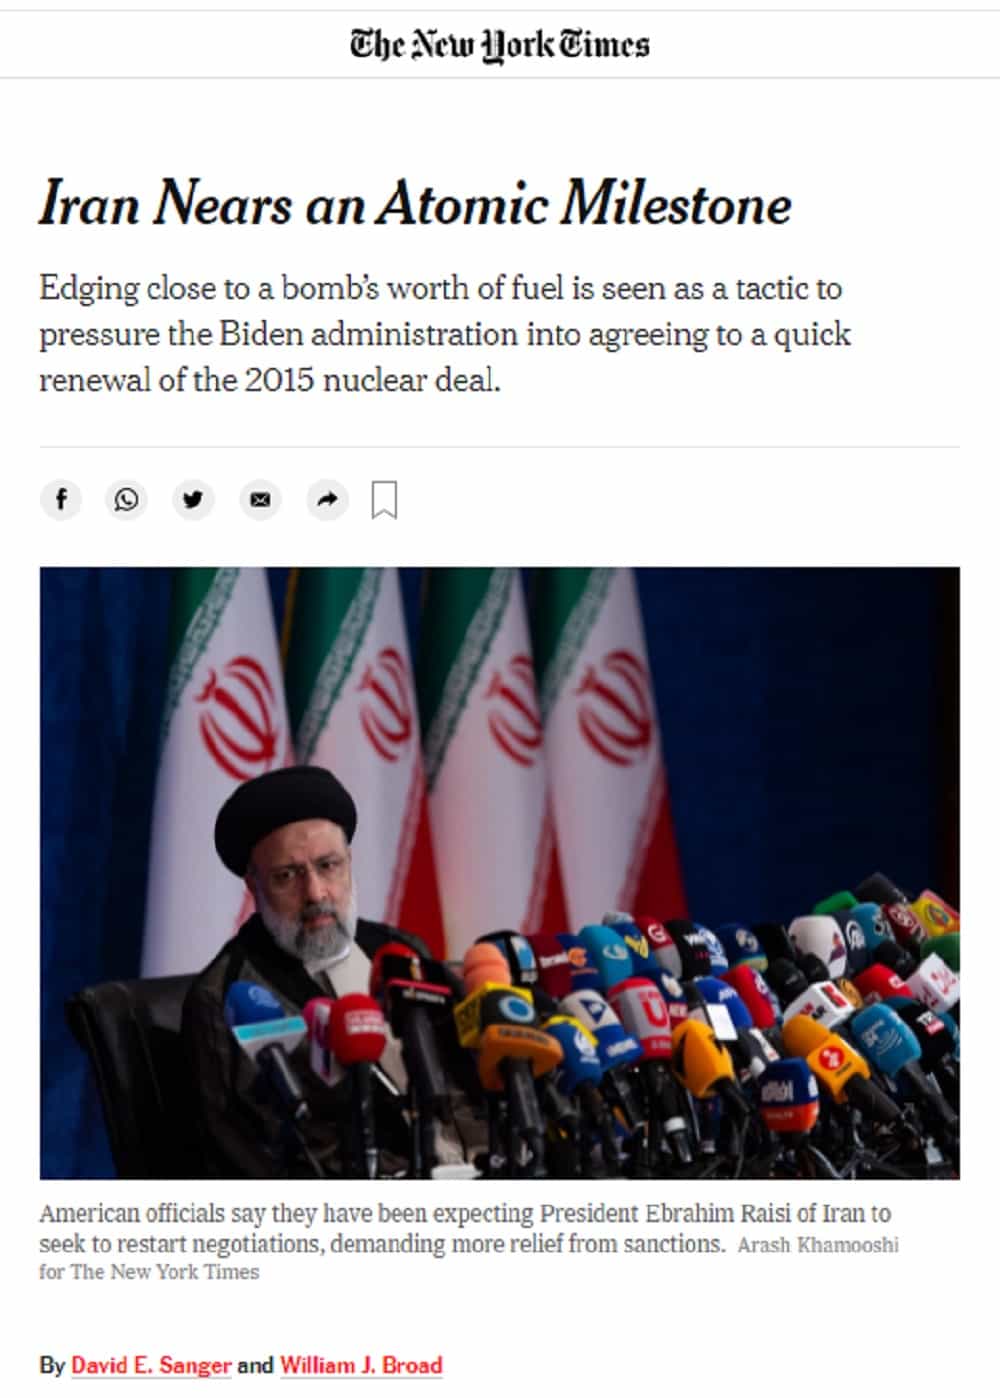 nyt-iran-article-nuclear-14092021-min